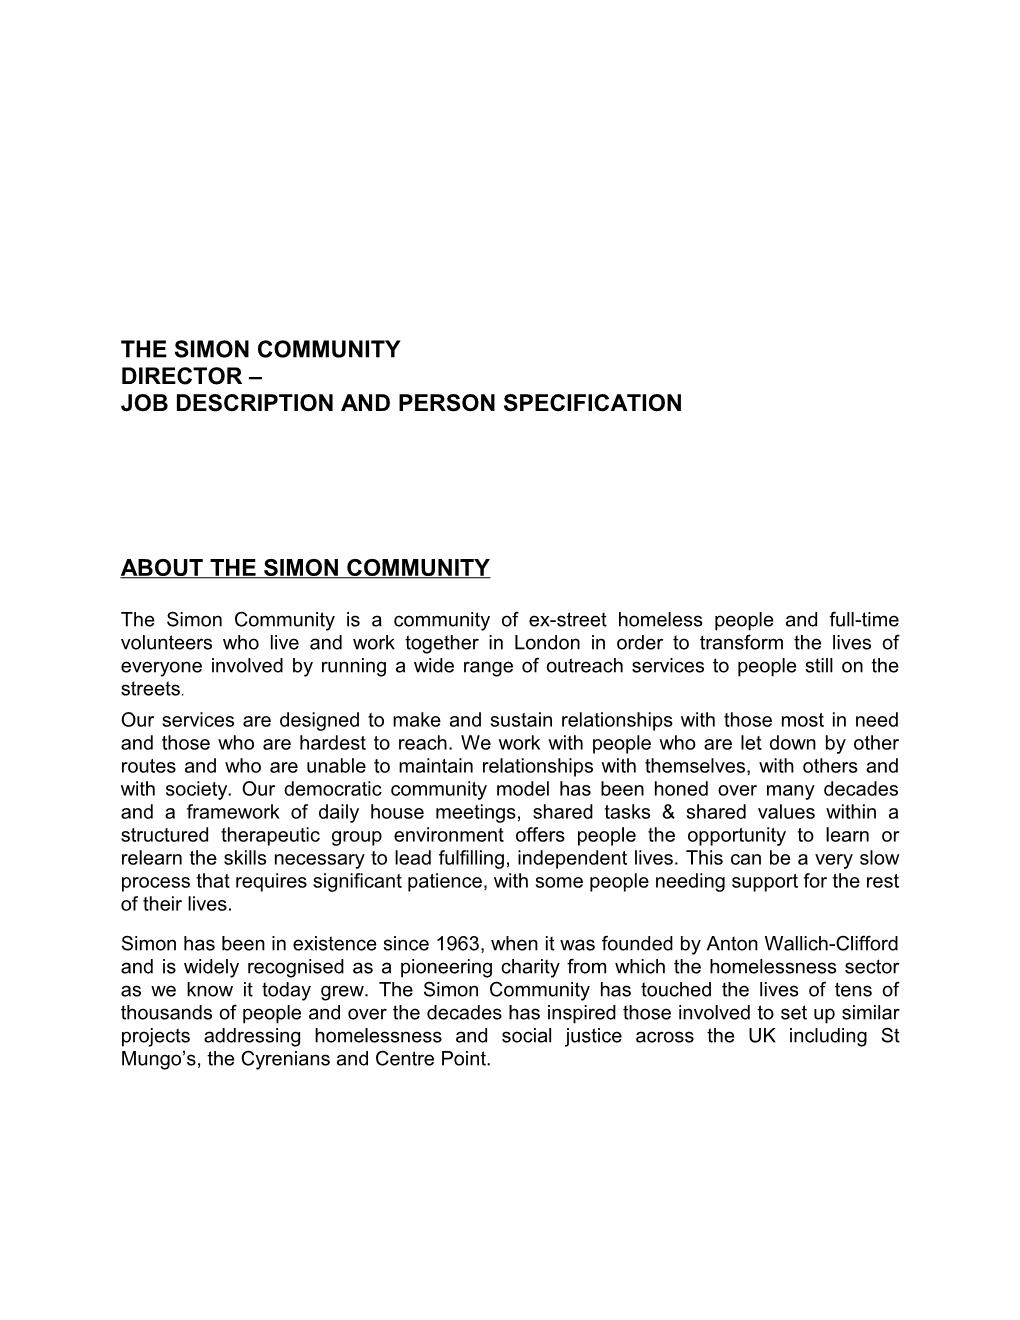 The Simon Community Director Job Description and Person Specification